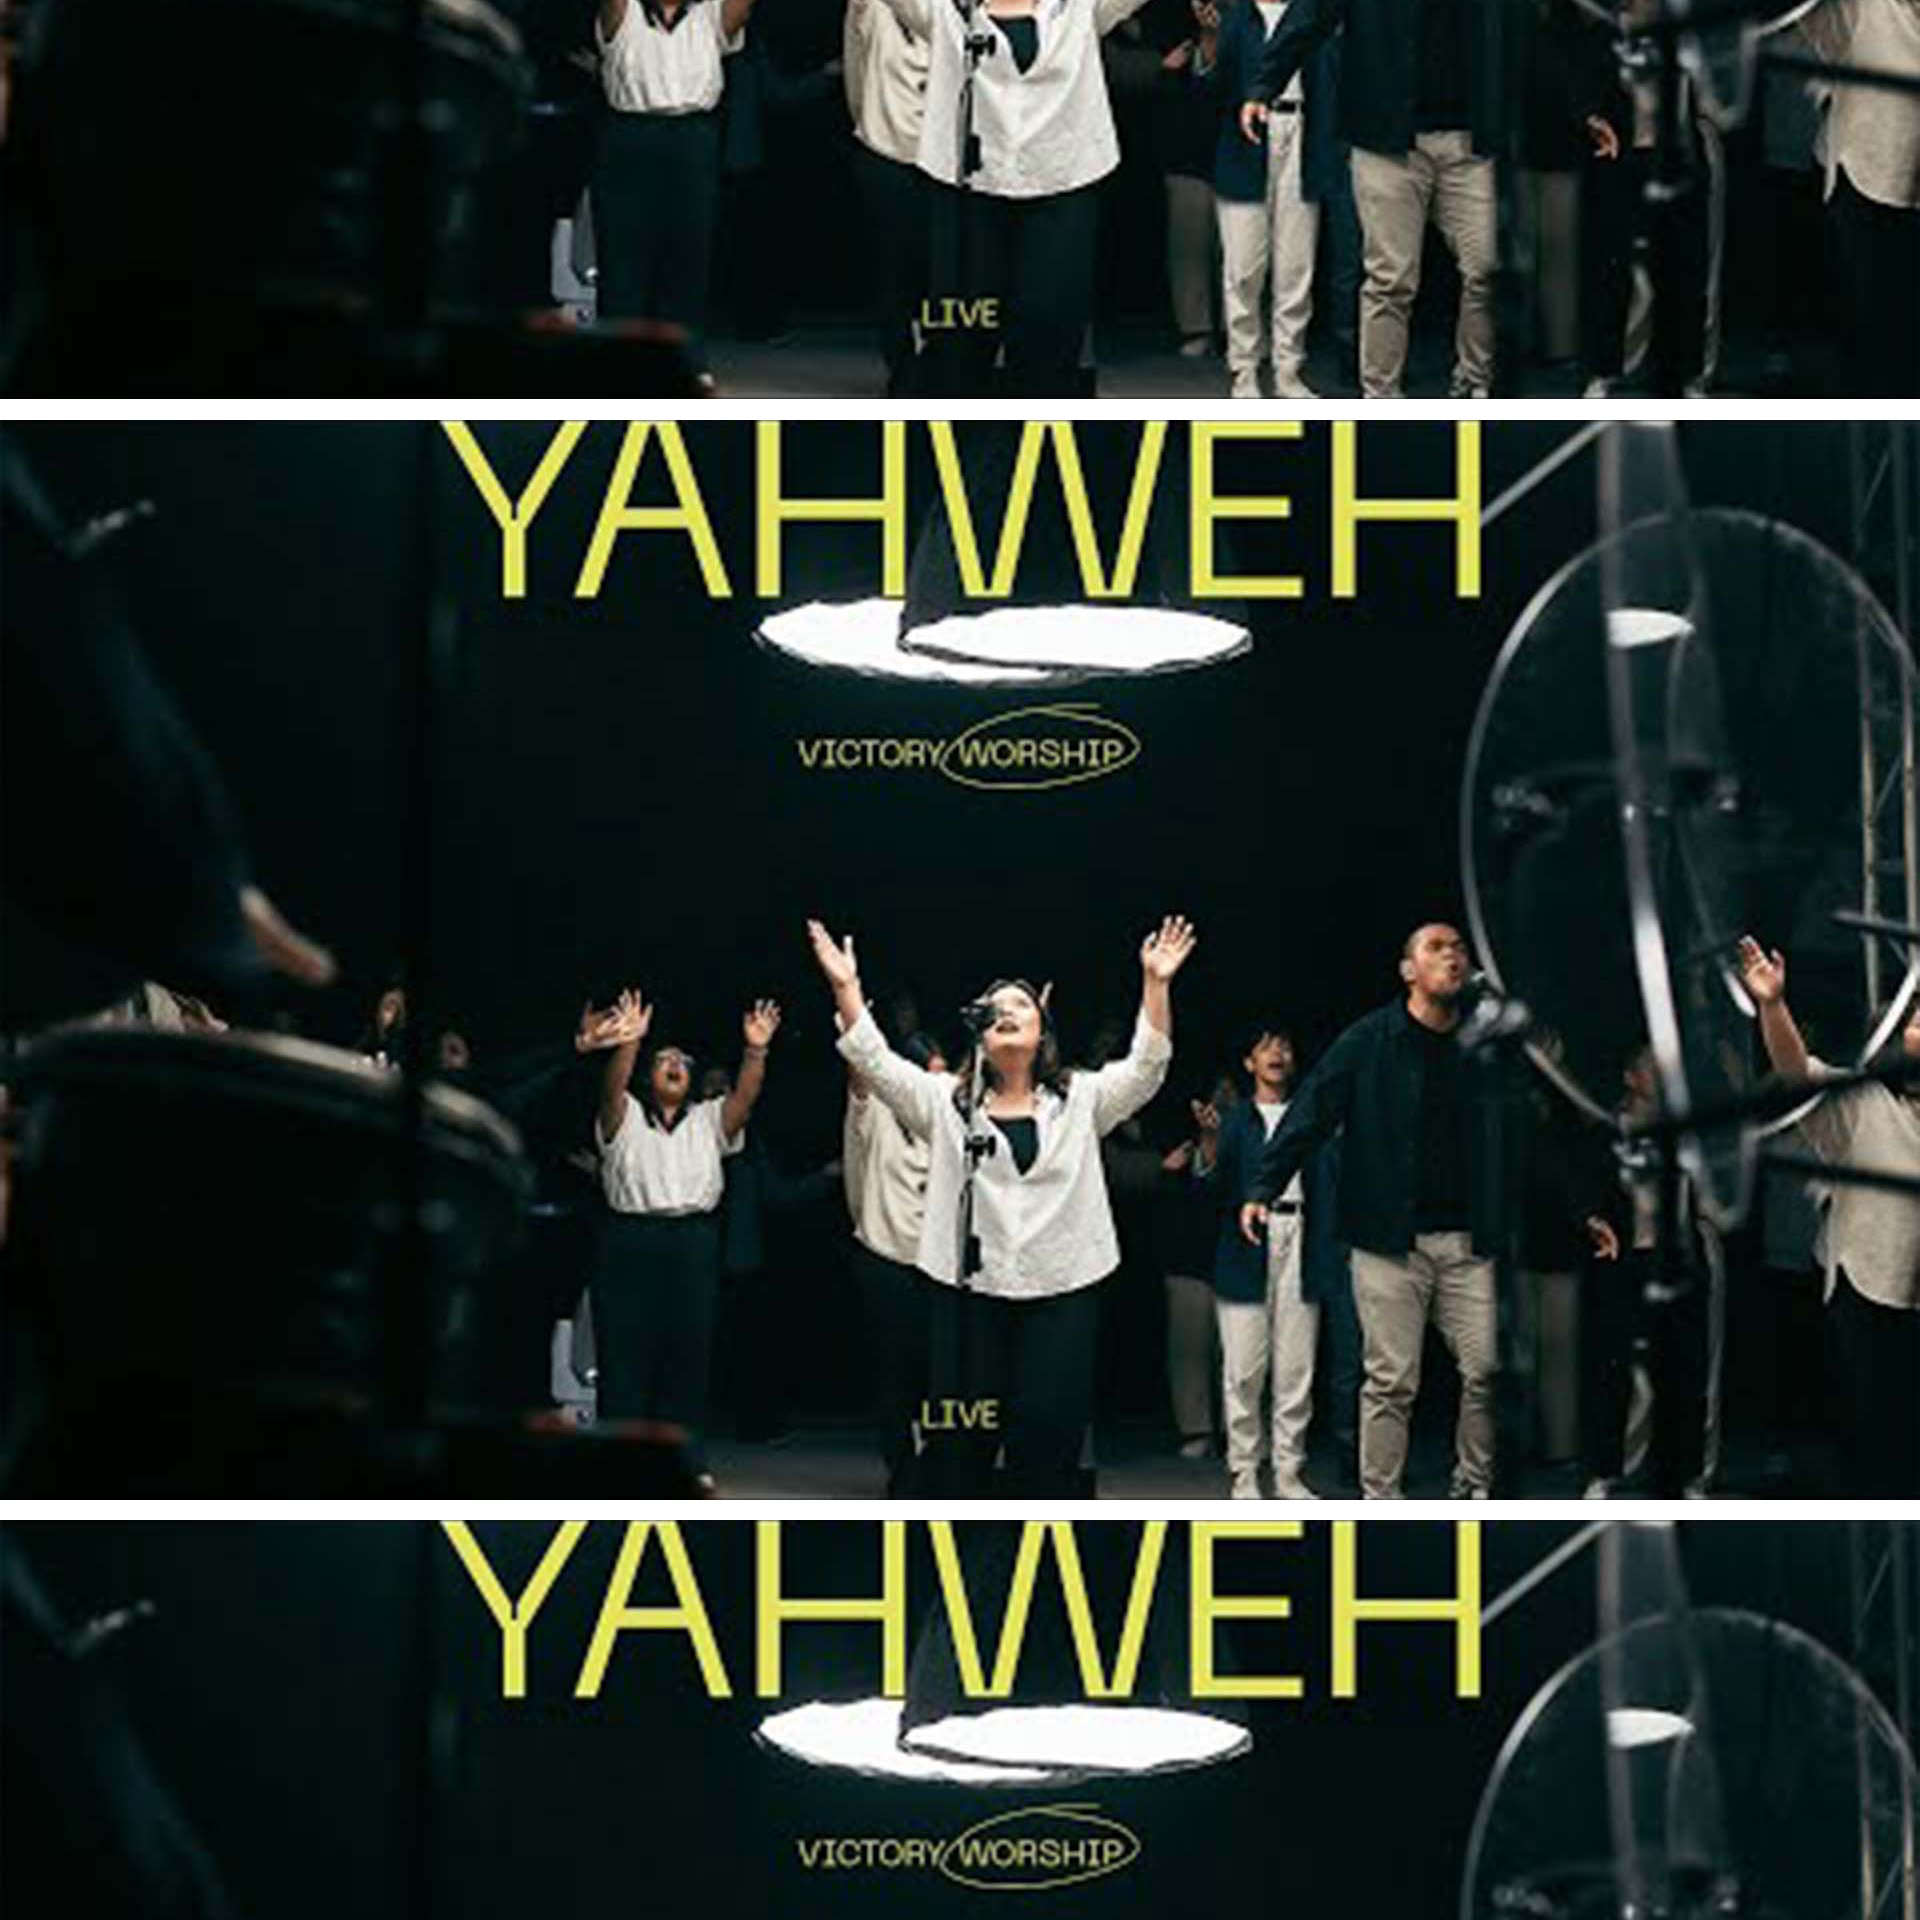 “Yahweh” by Victory Worship